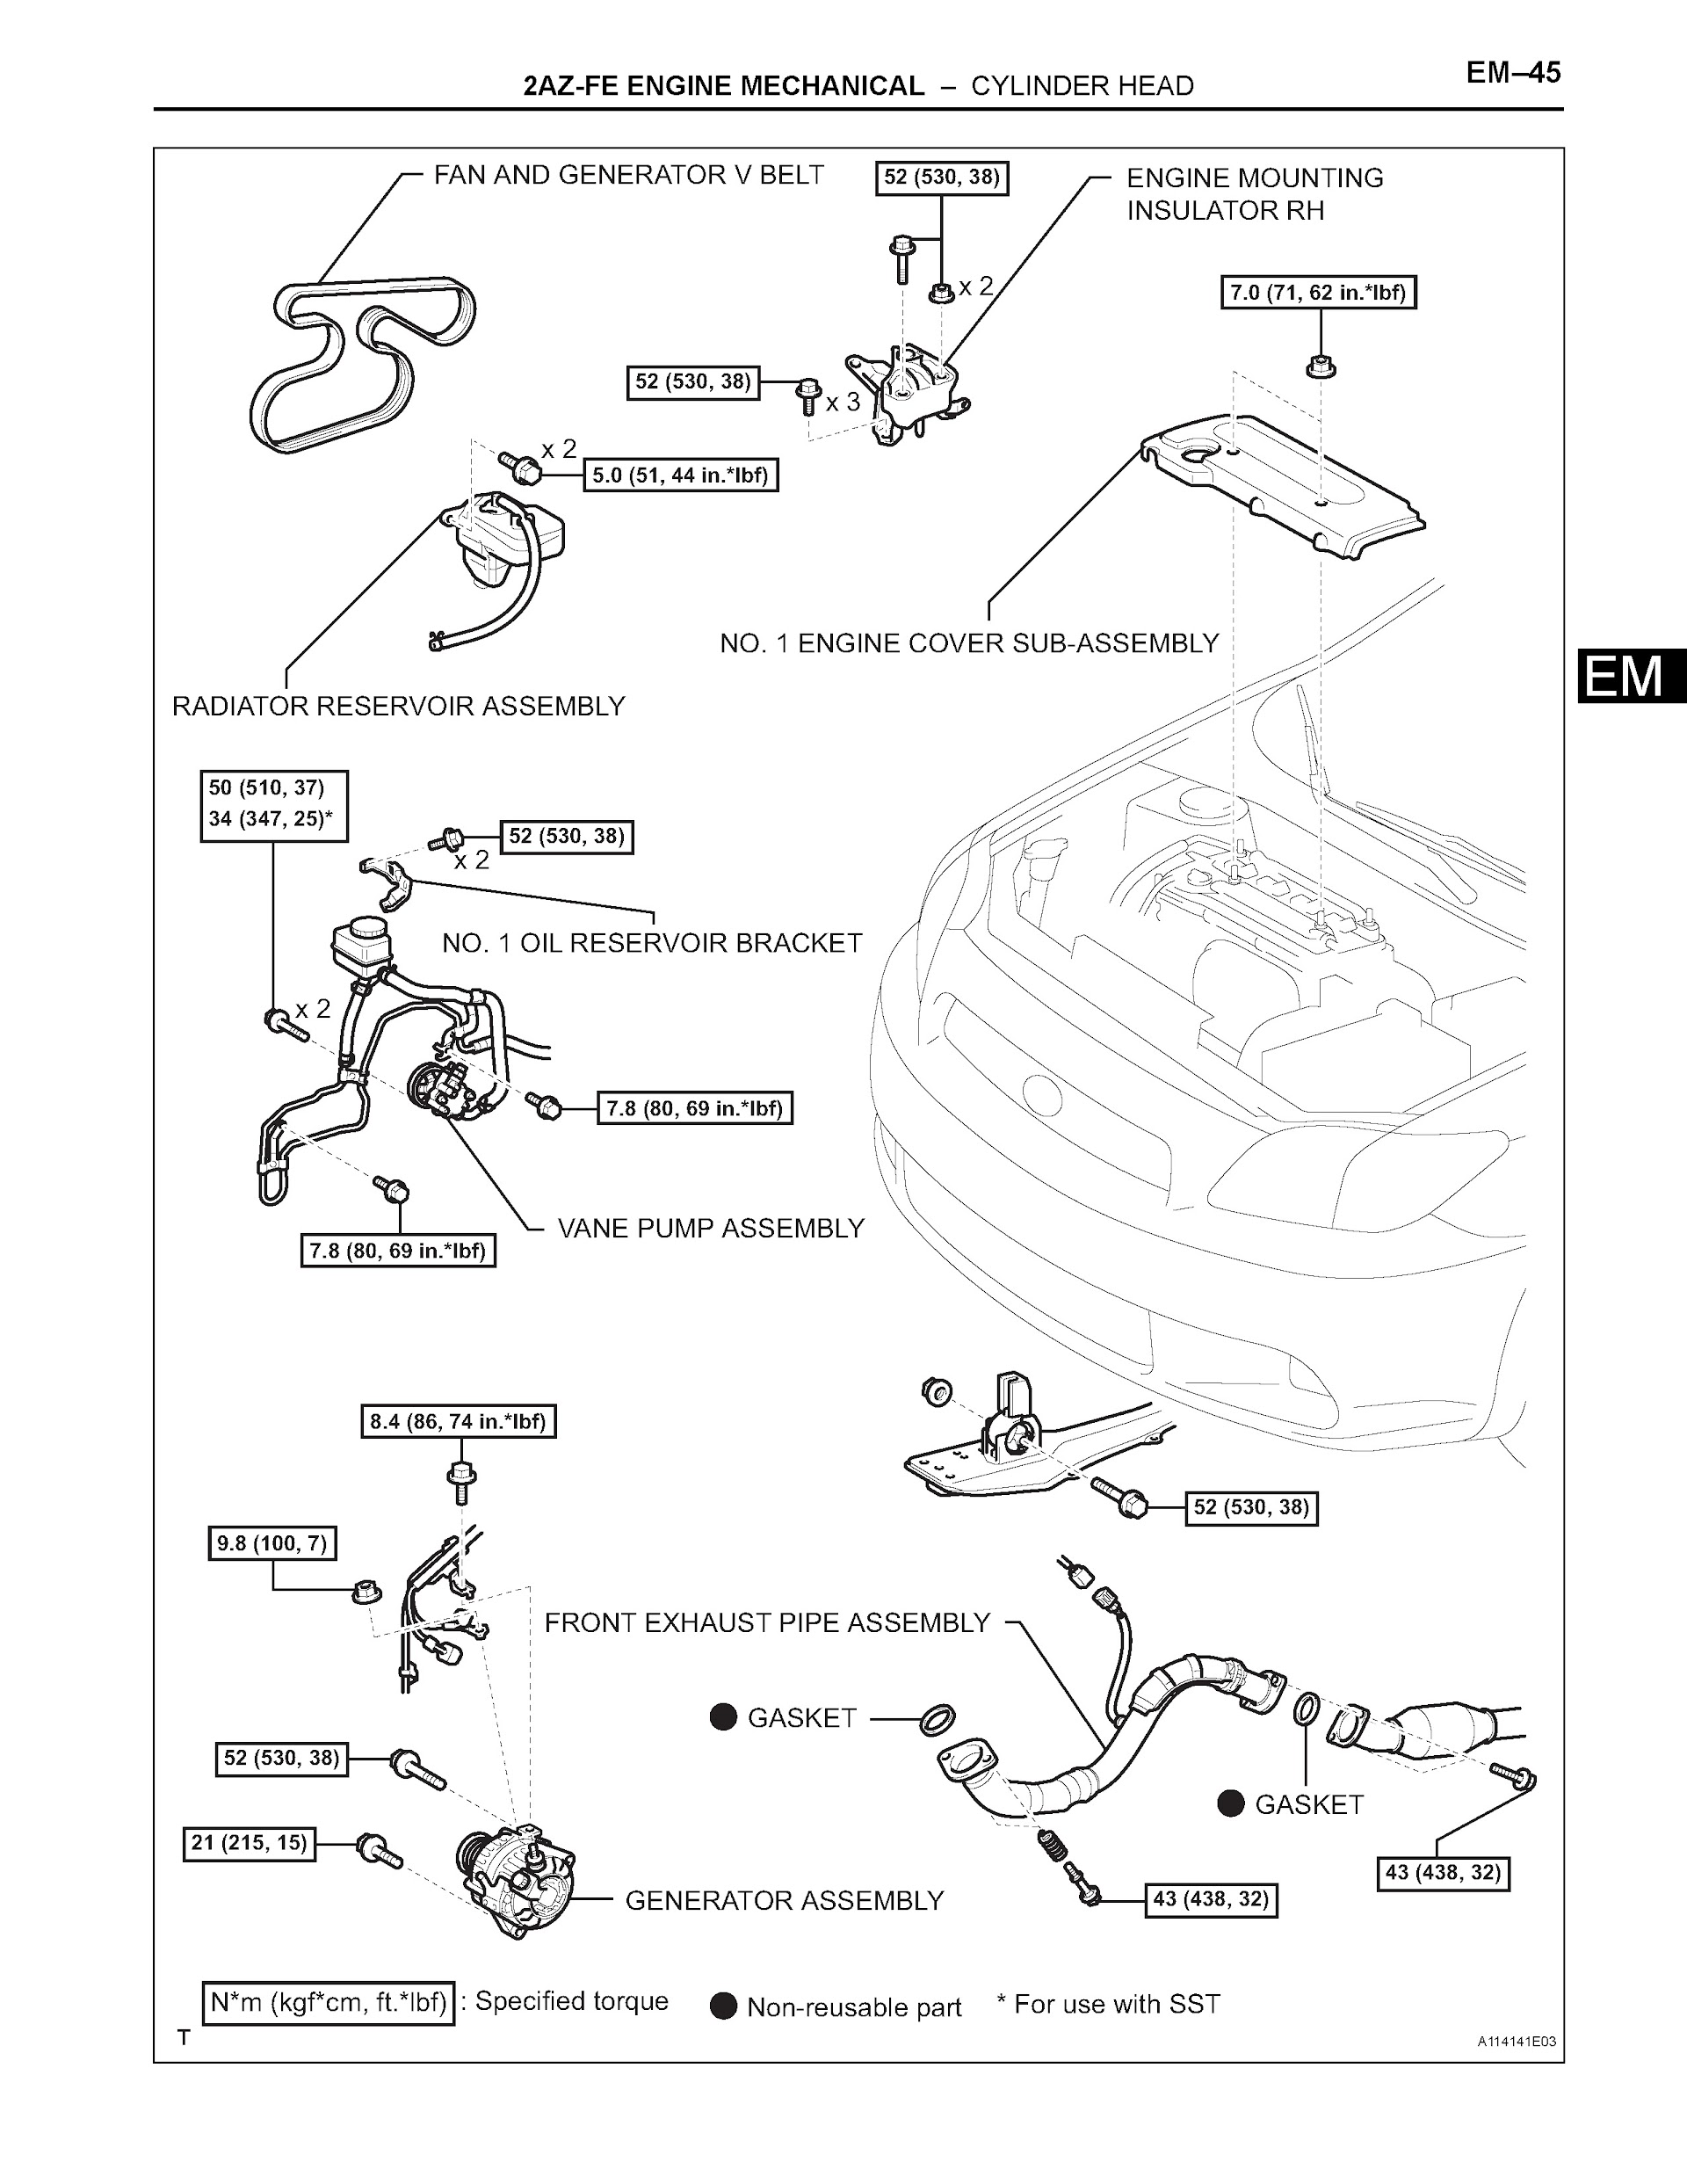 2011 scion tc repair manual pdf, 2AZ-FE Engine Mechanical - Timing Chain